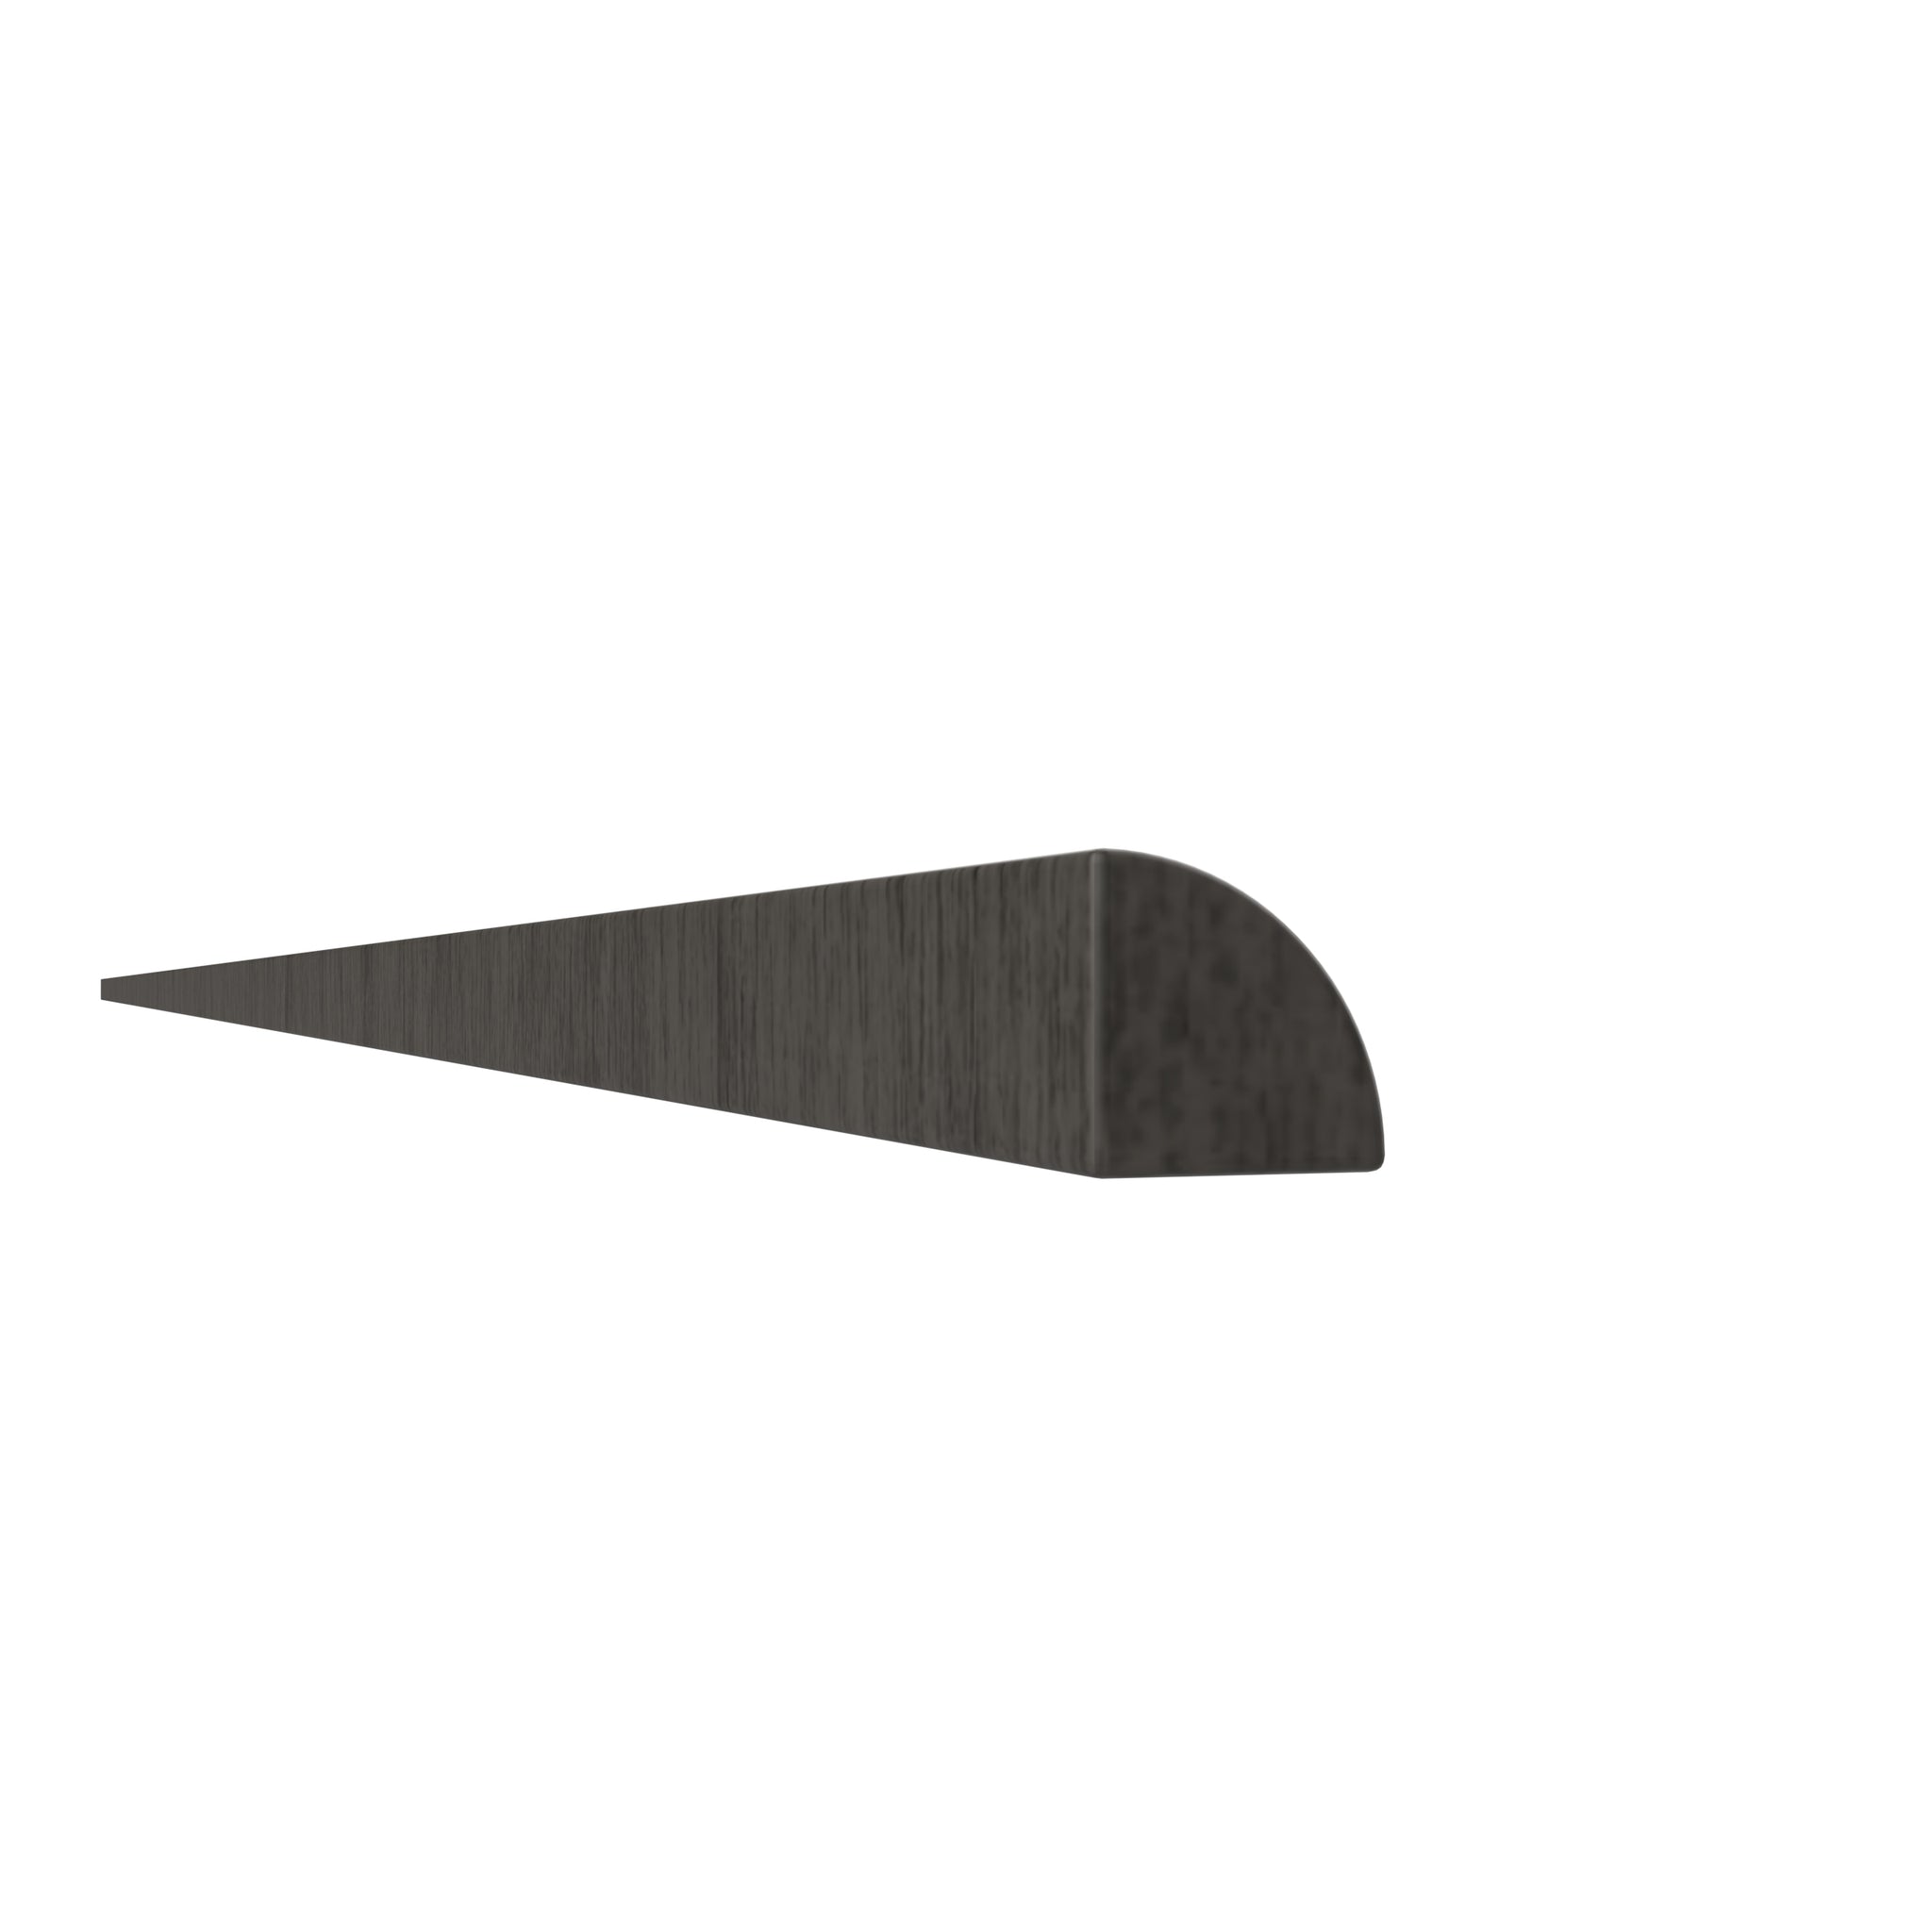 Luxor Smoky Grey - Shoe Molding | 96"W x 0.75"H x 0.75"D